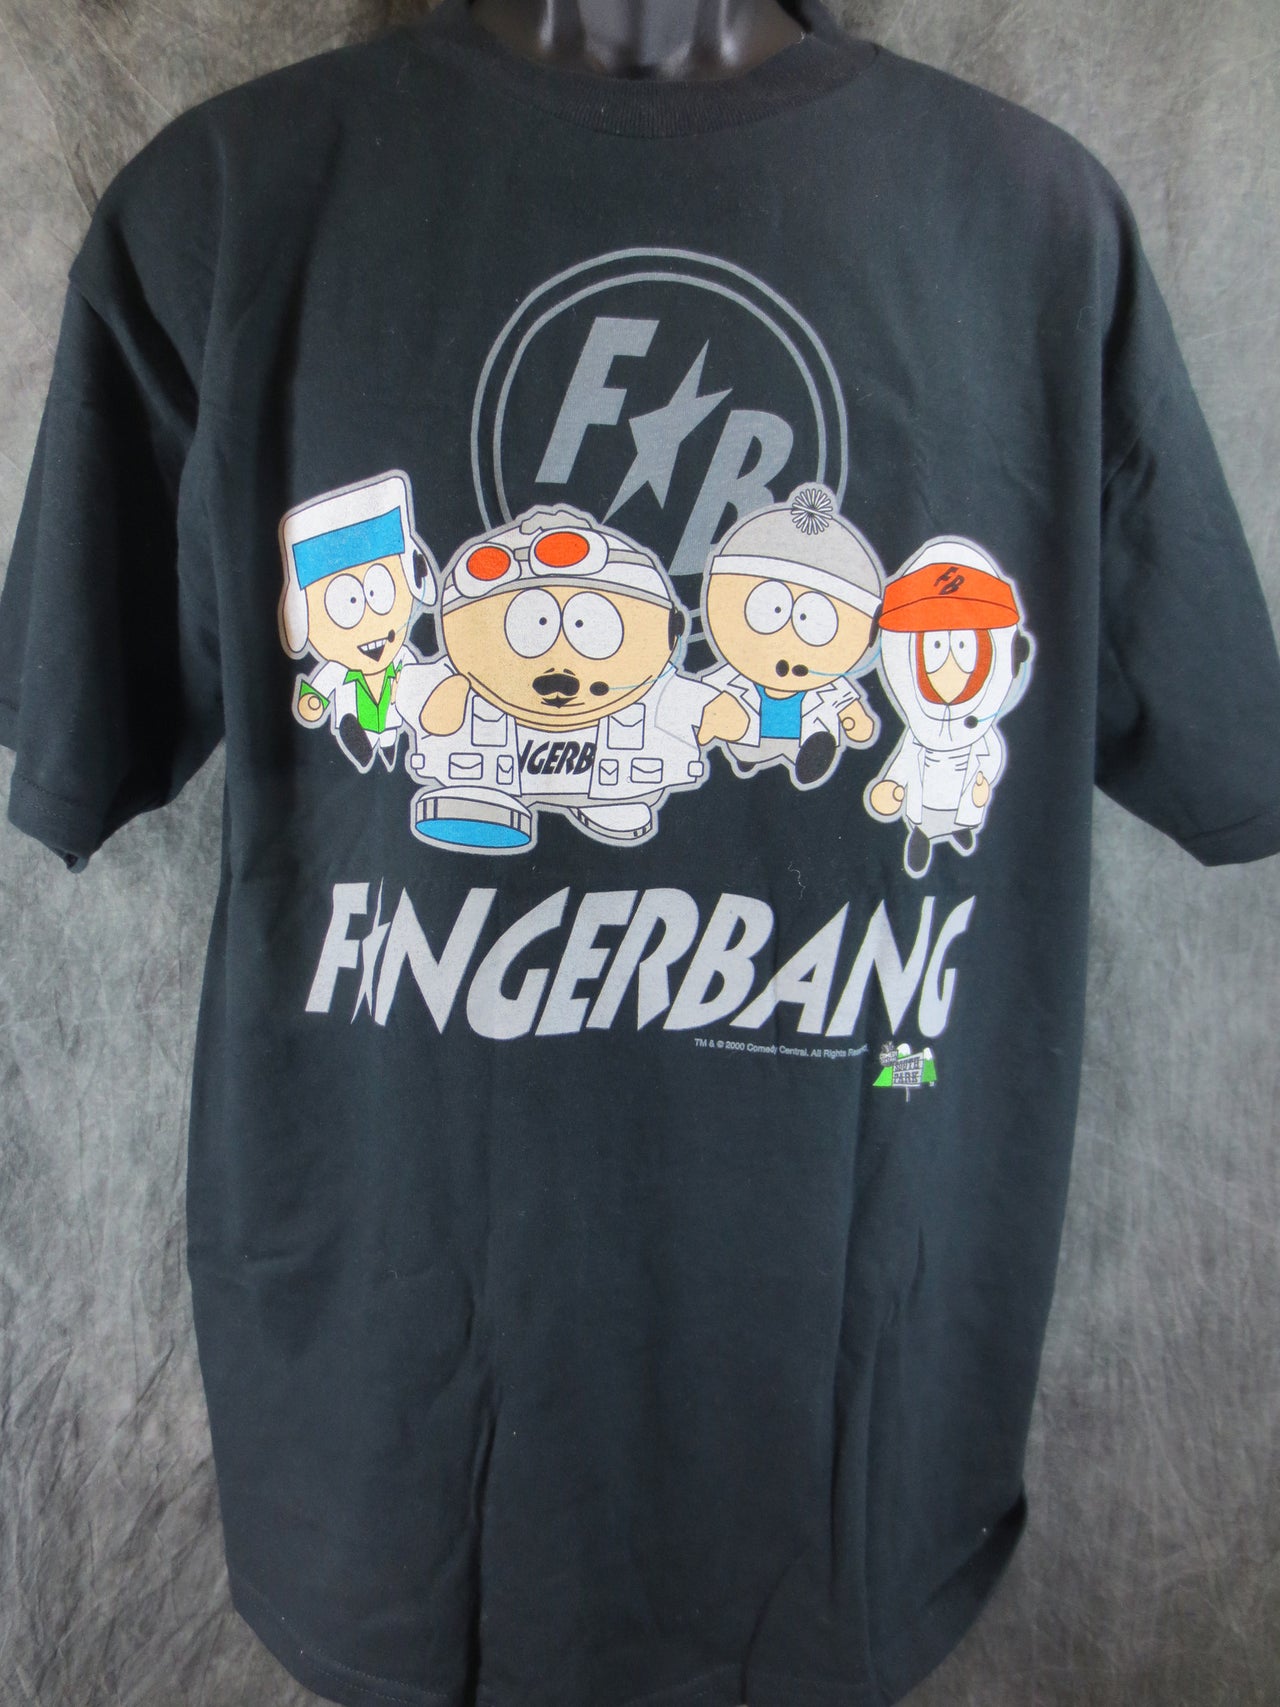 South Park Fingerbang Adult Black Size Large Tshirt - TshirtNow.net - 1